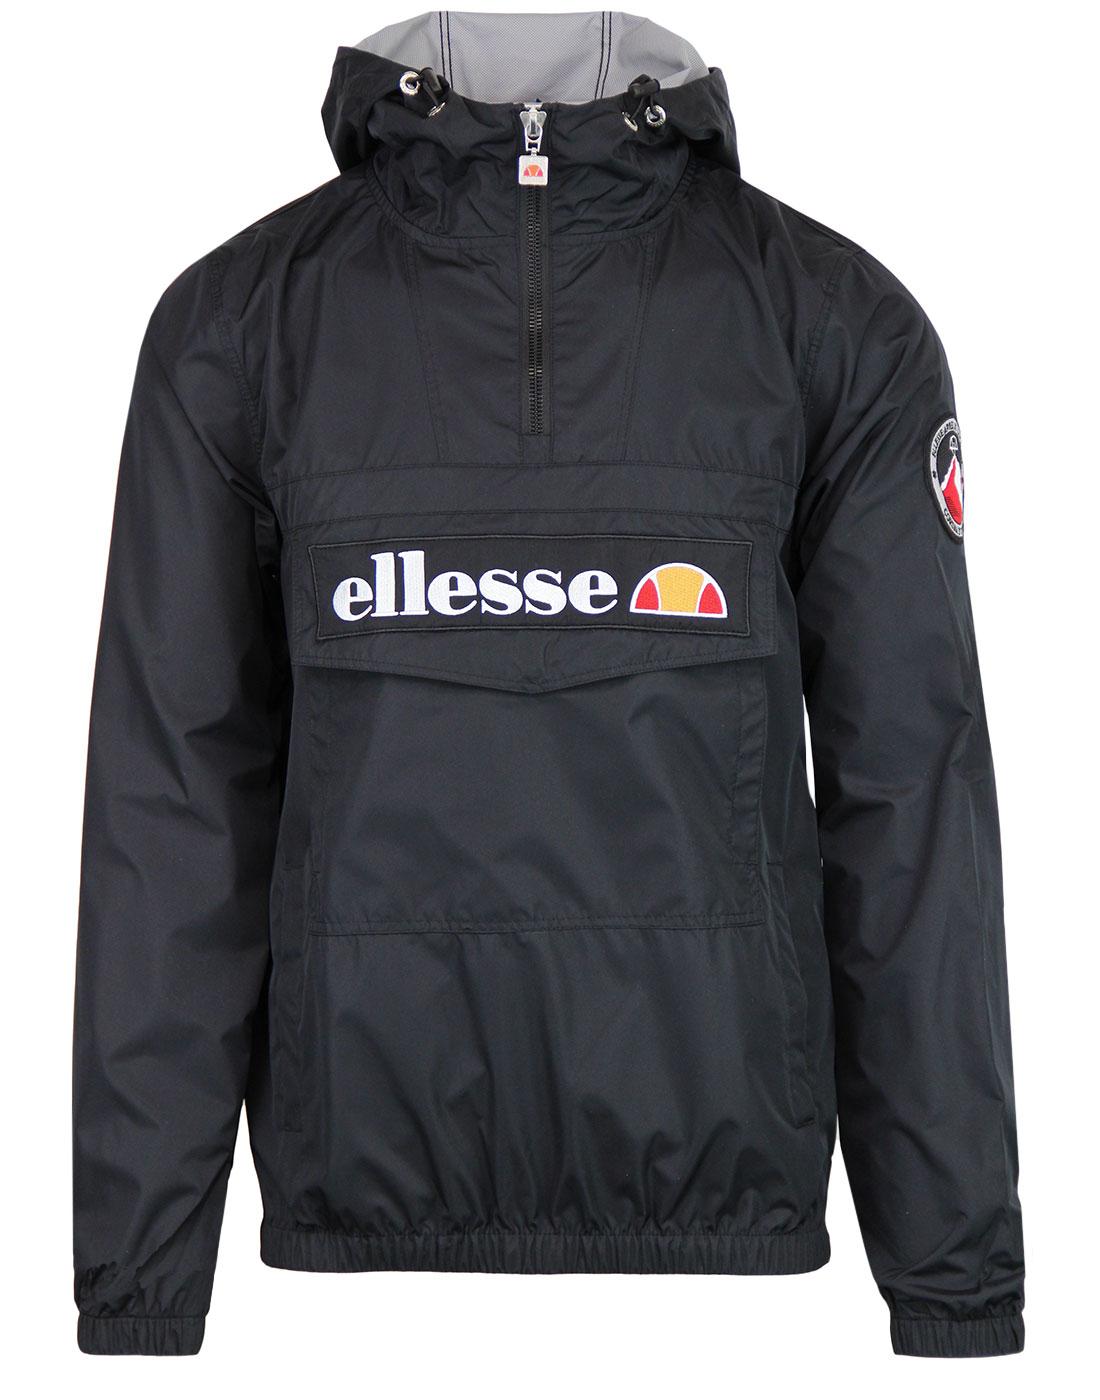 ELLESSE Women's Retro 80s Oversize Overhead Jacket Black